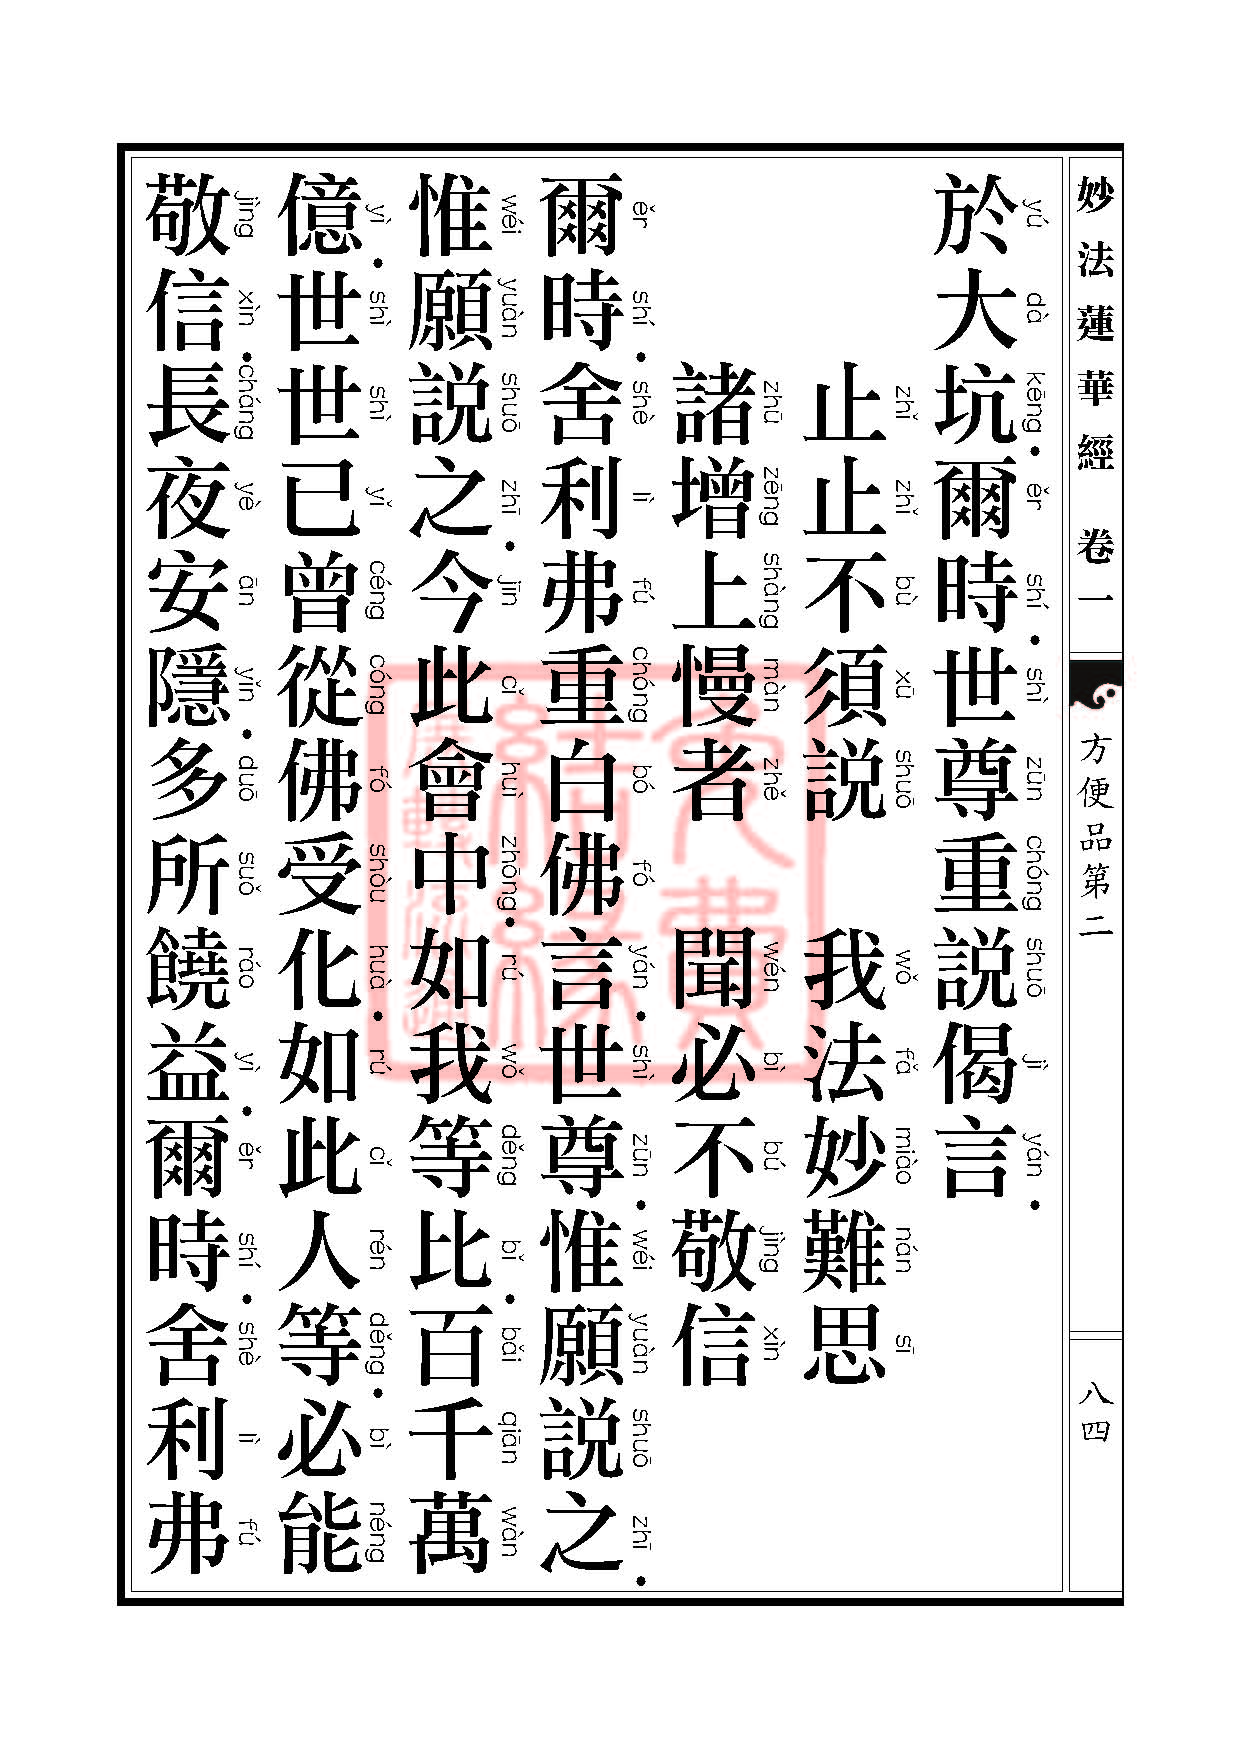 Book_FHJ_HK-A6-PY_Web_ҳ_084.jpg